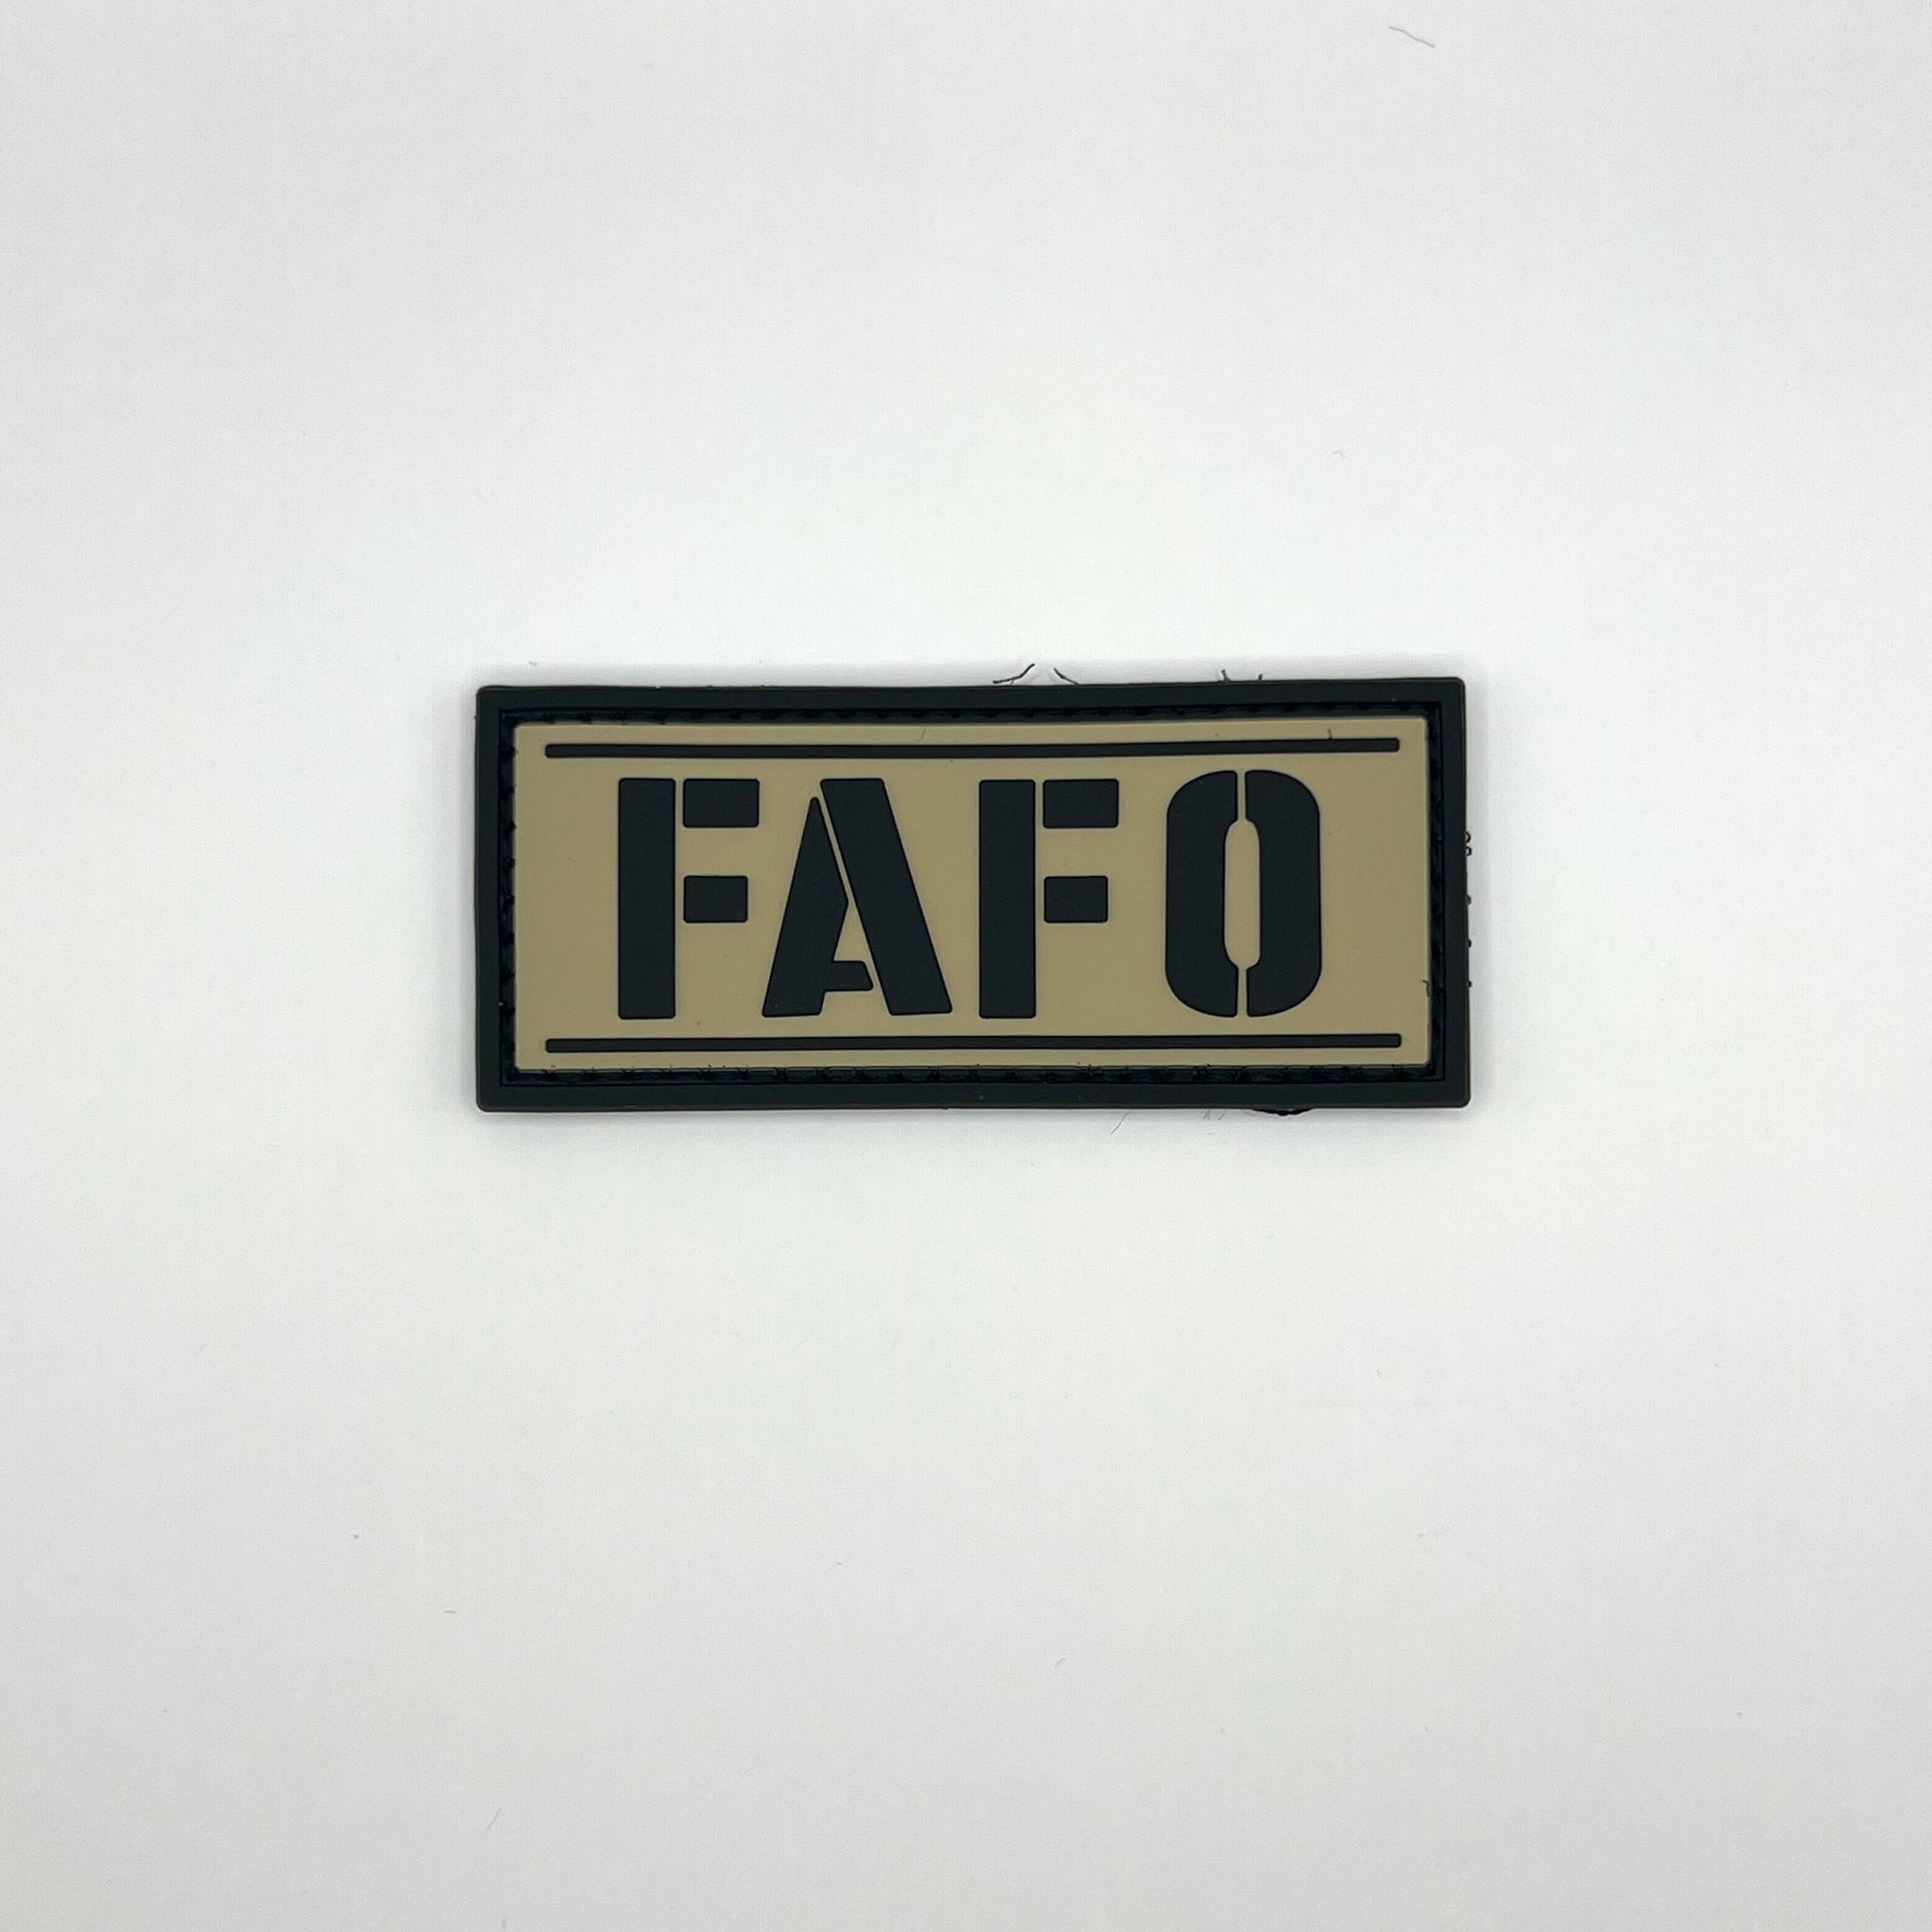 FAFO CAUTION PVC Patch – Imaginary Friends